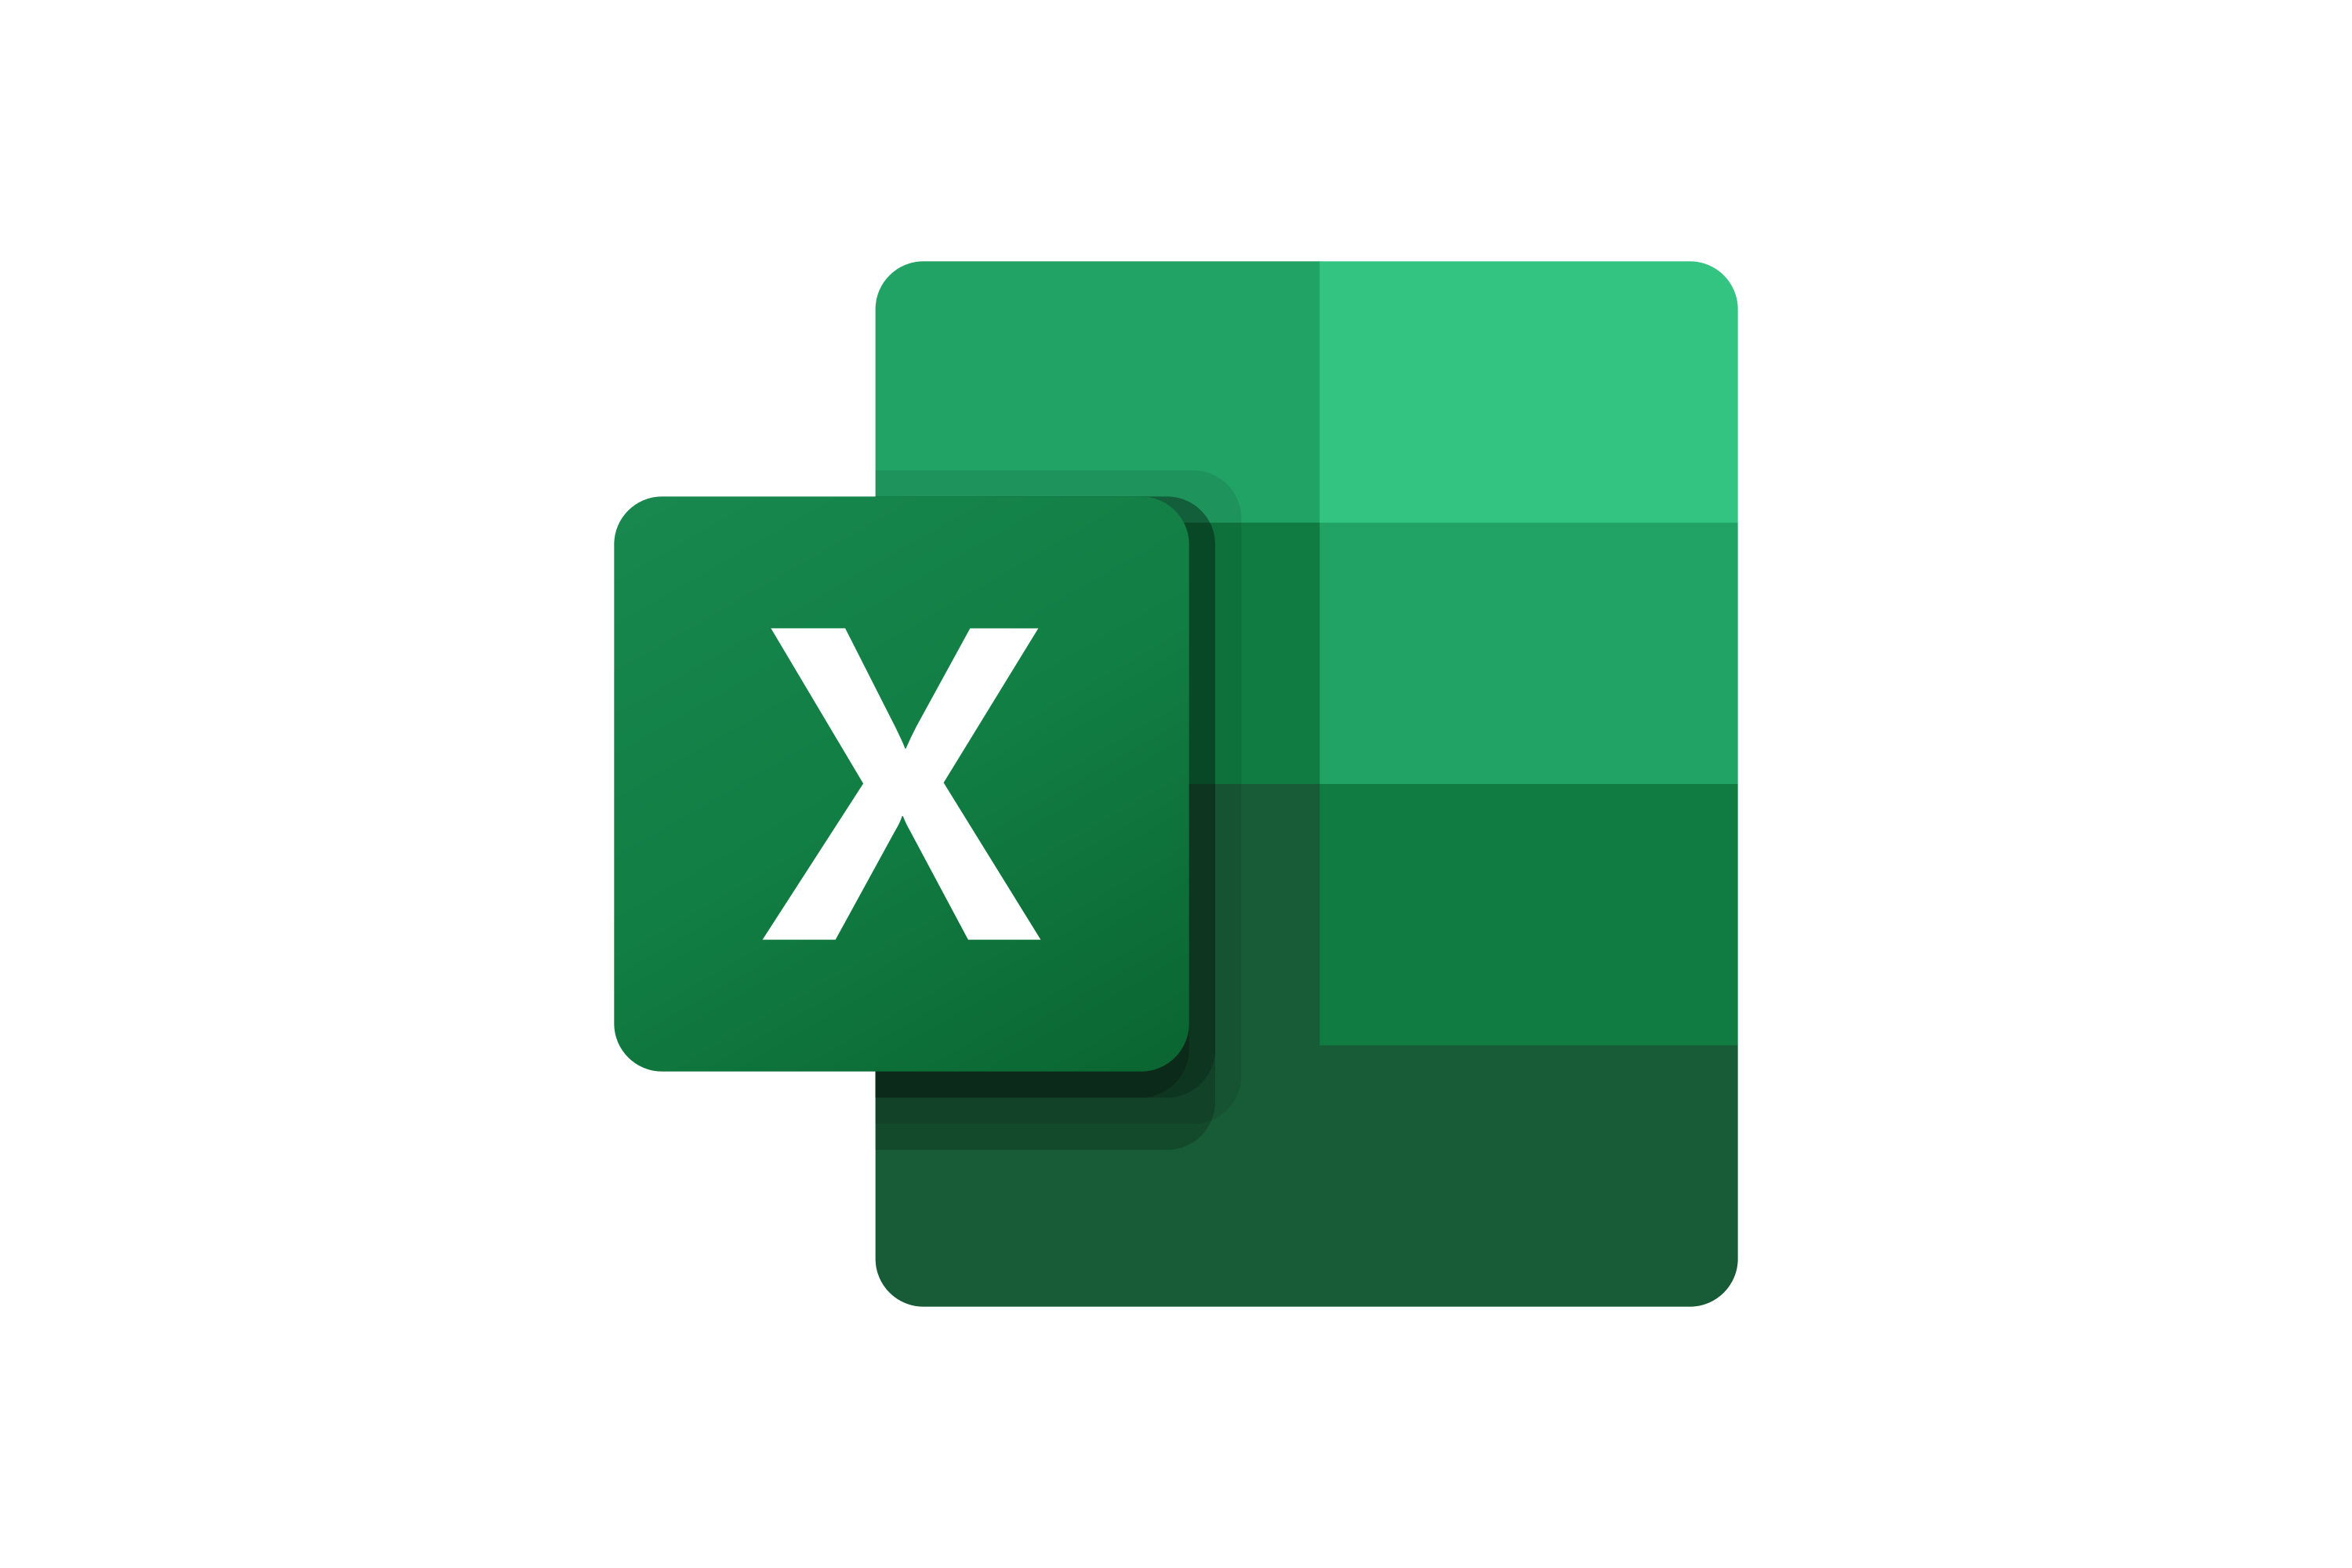 Microsoft Excel Logo Icon Of 